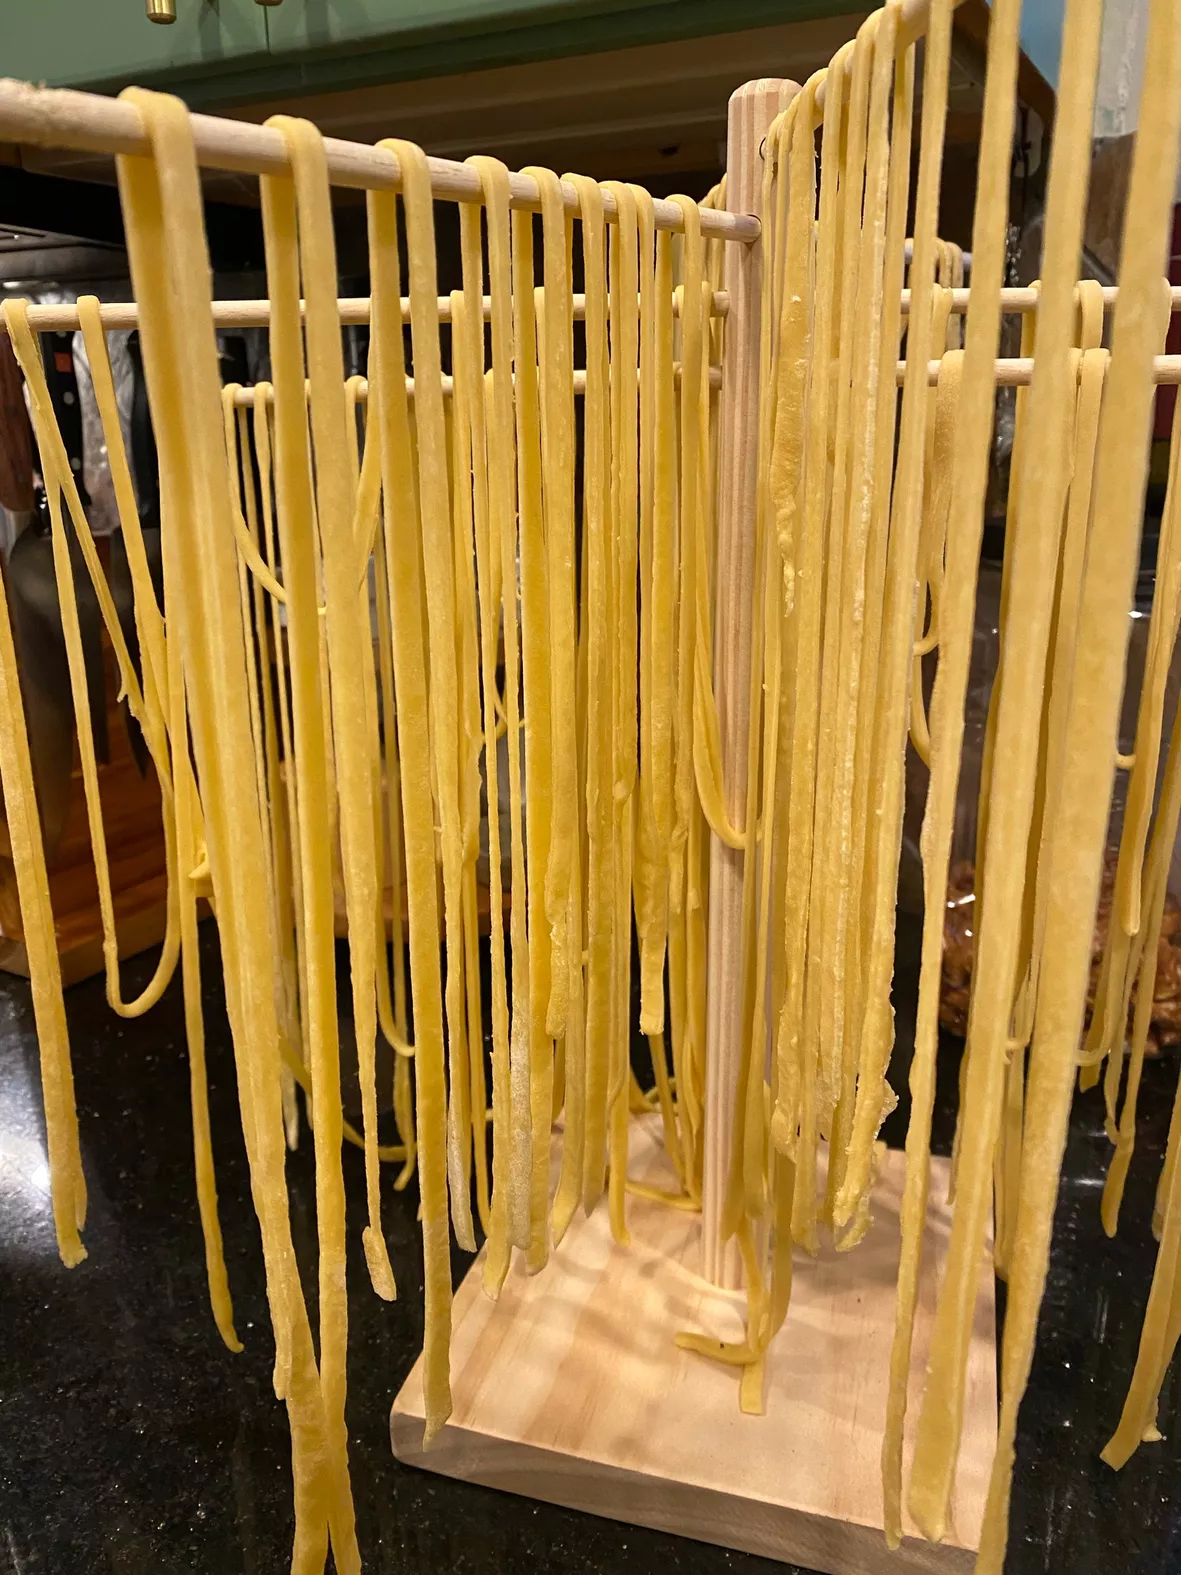 Hardwood Pasta Drying Rack Designed to Work With Kitchenaid Pasta